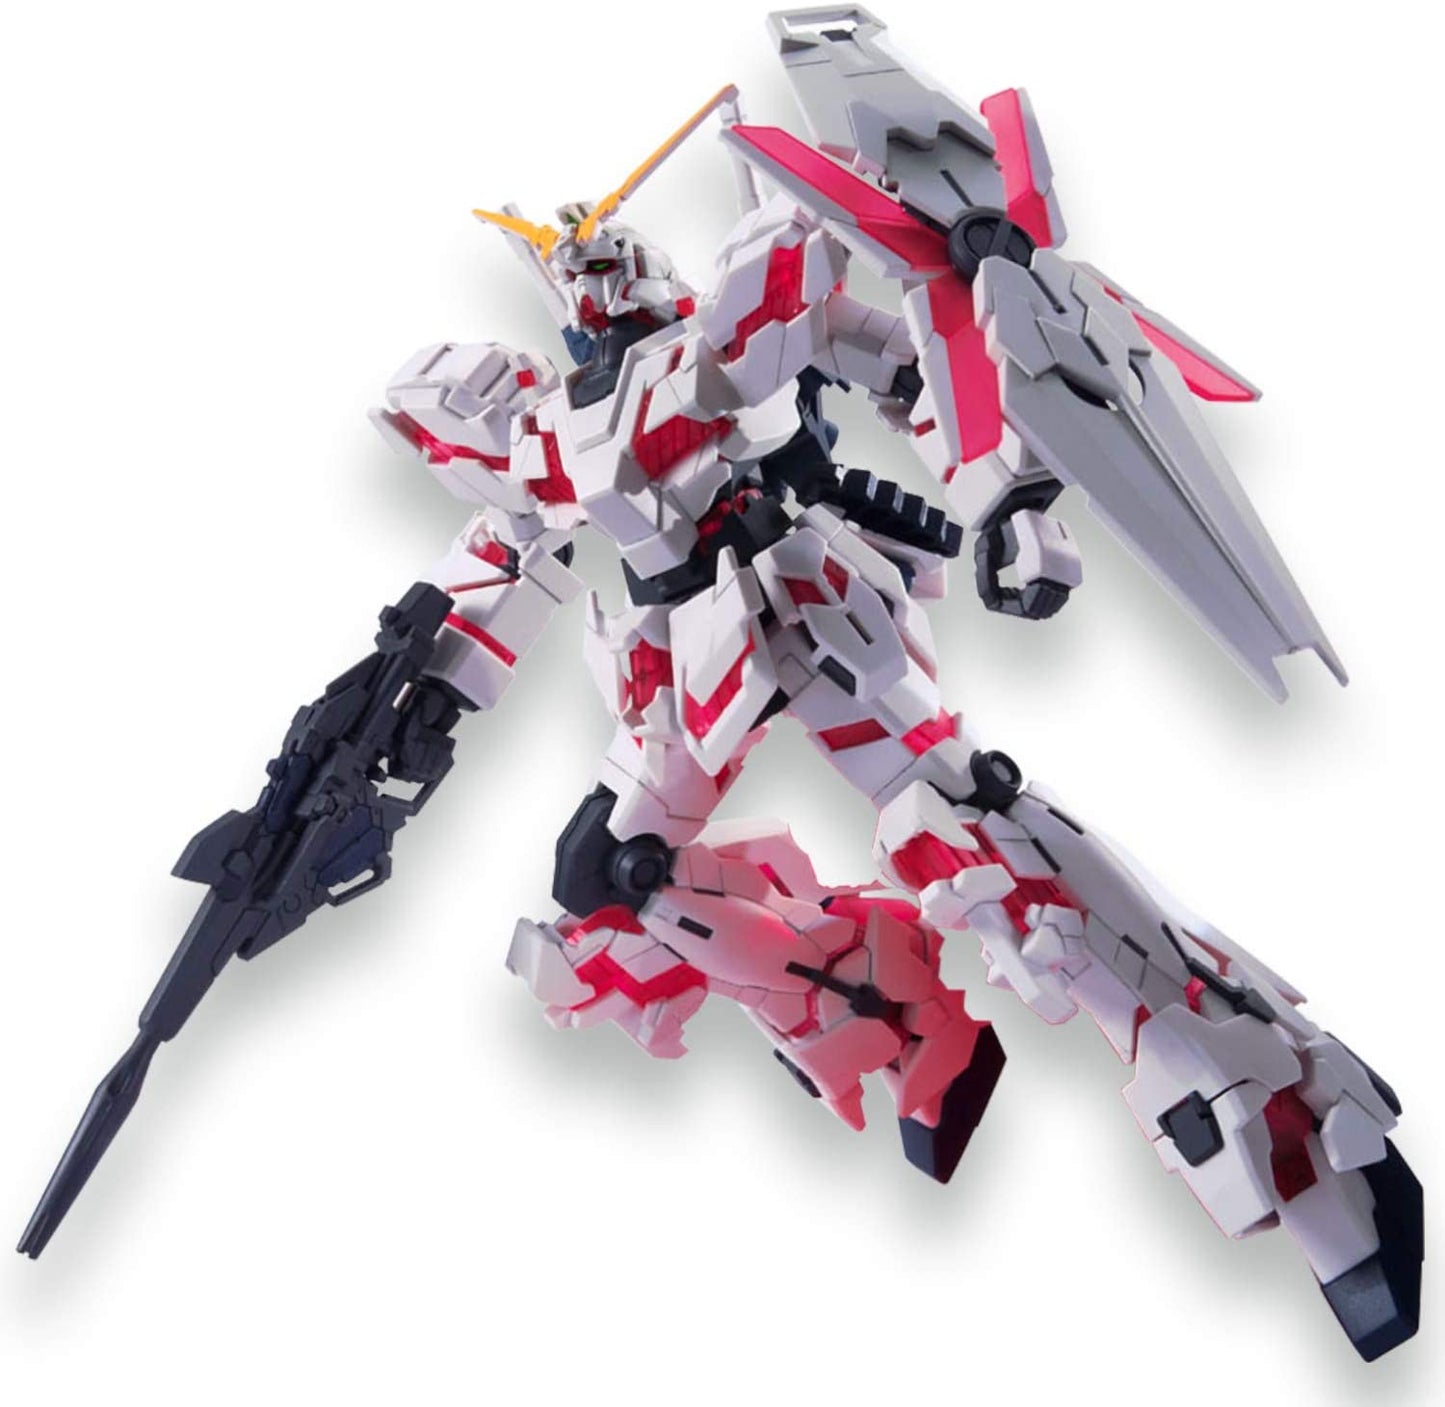 Einhorn Gundam (Zerstörungsmodus) „Gundam UC“, Bandai HGUC 1/144 Modellbausatz